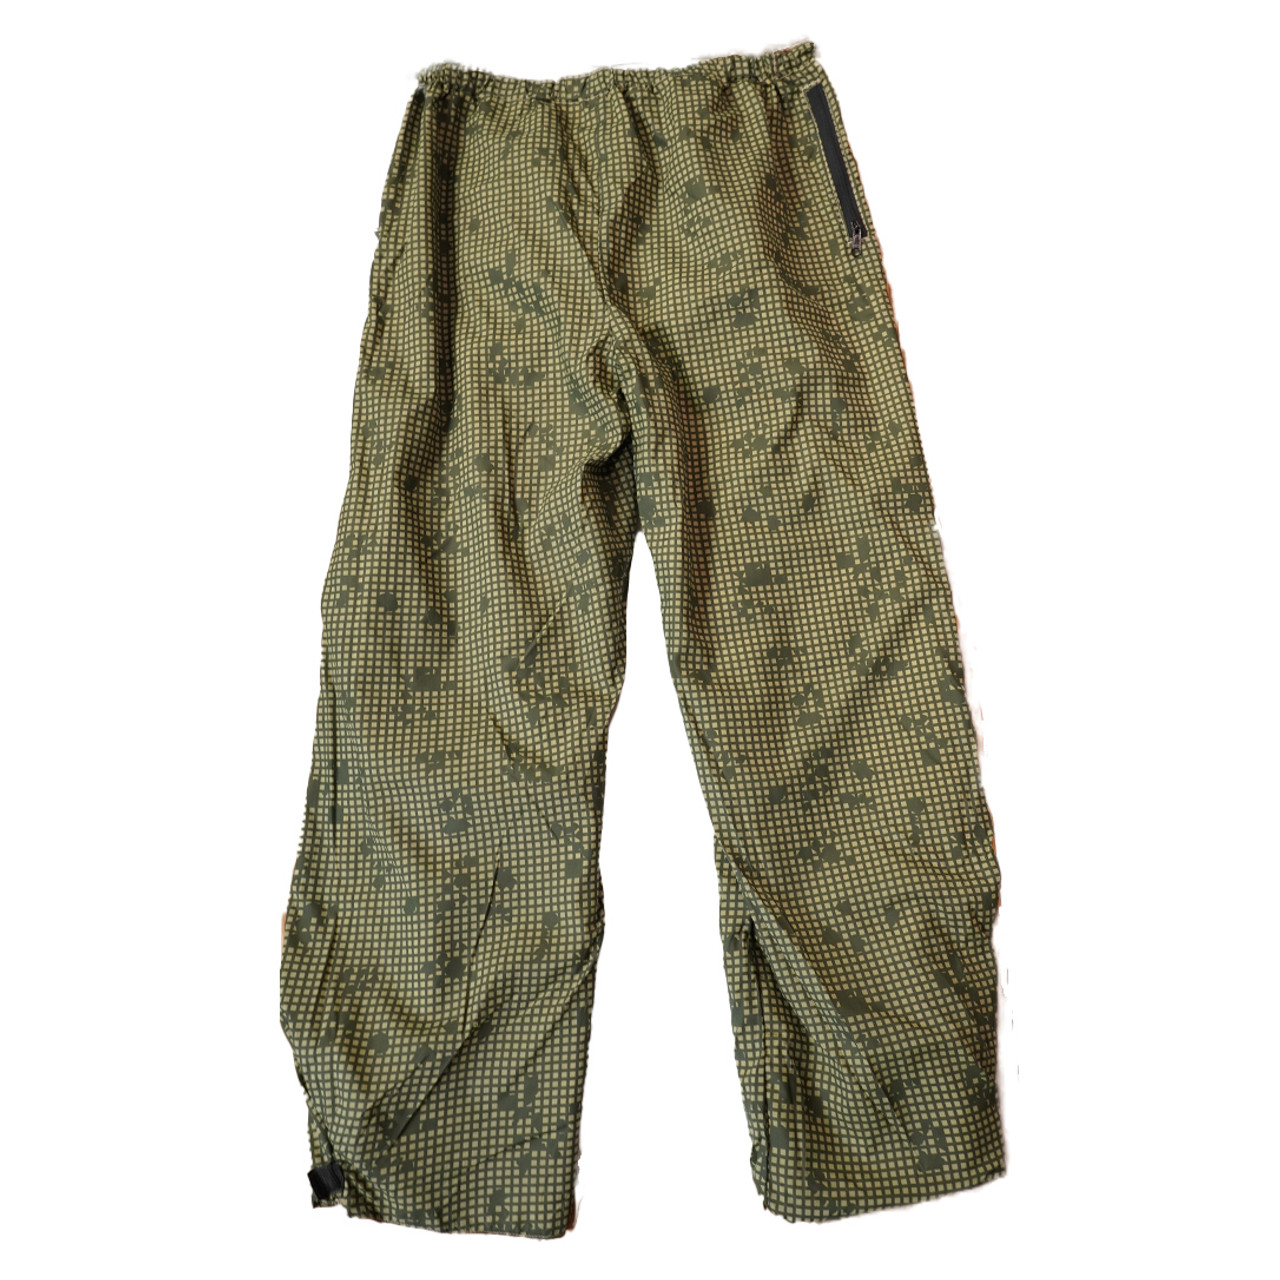 Gi Style 3-Color Desert Camo DCU Field Pants